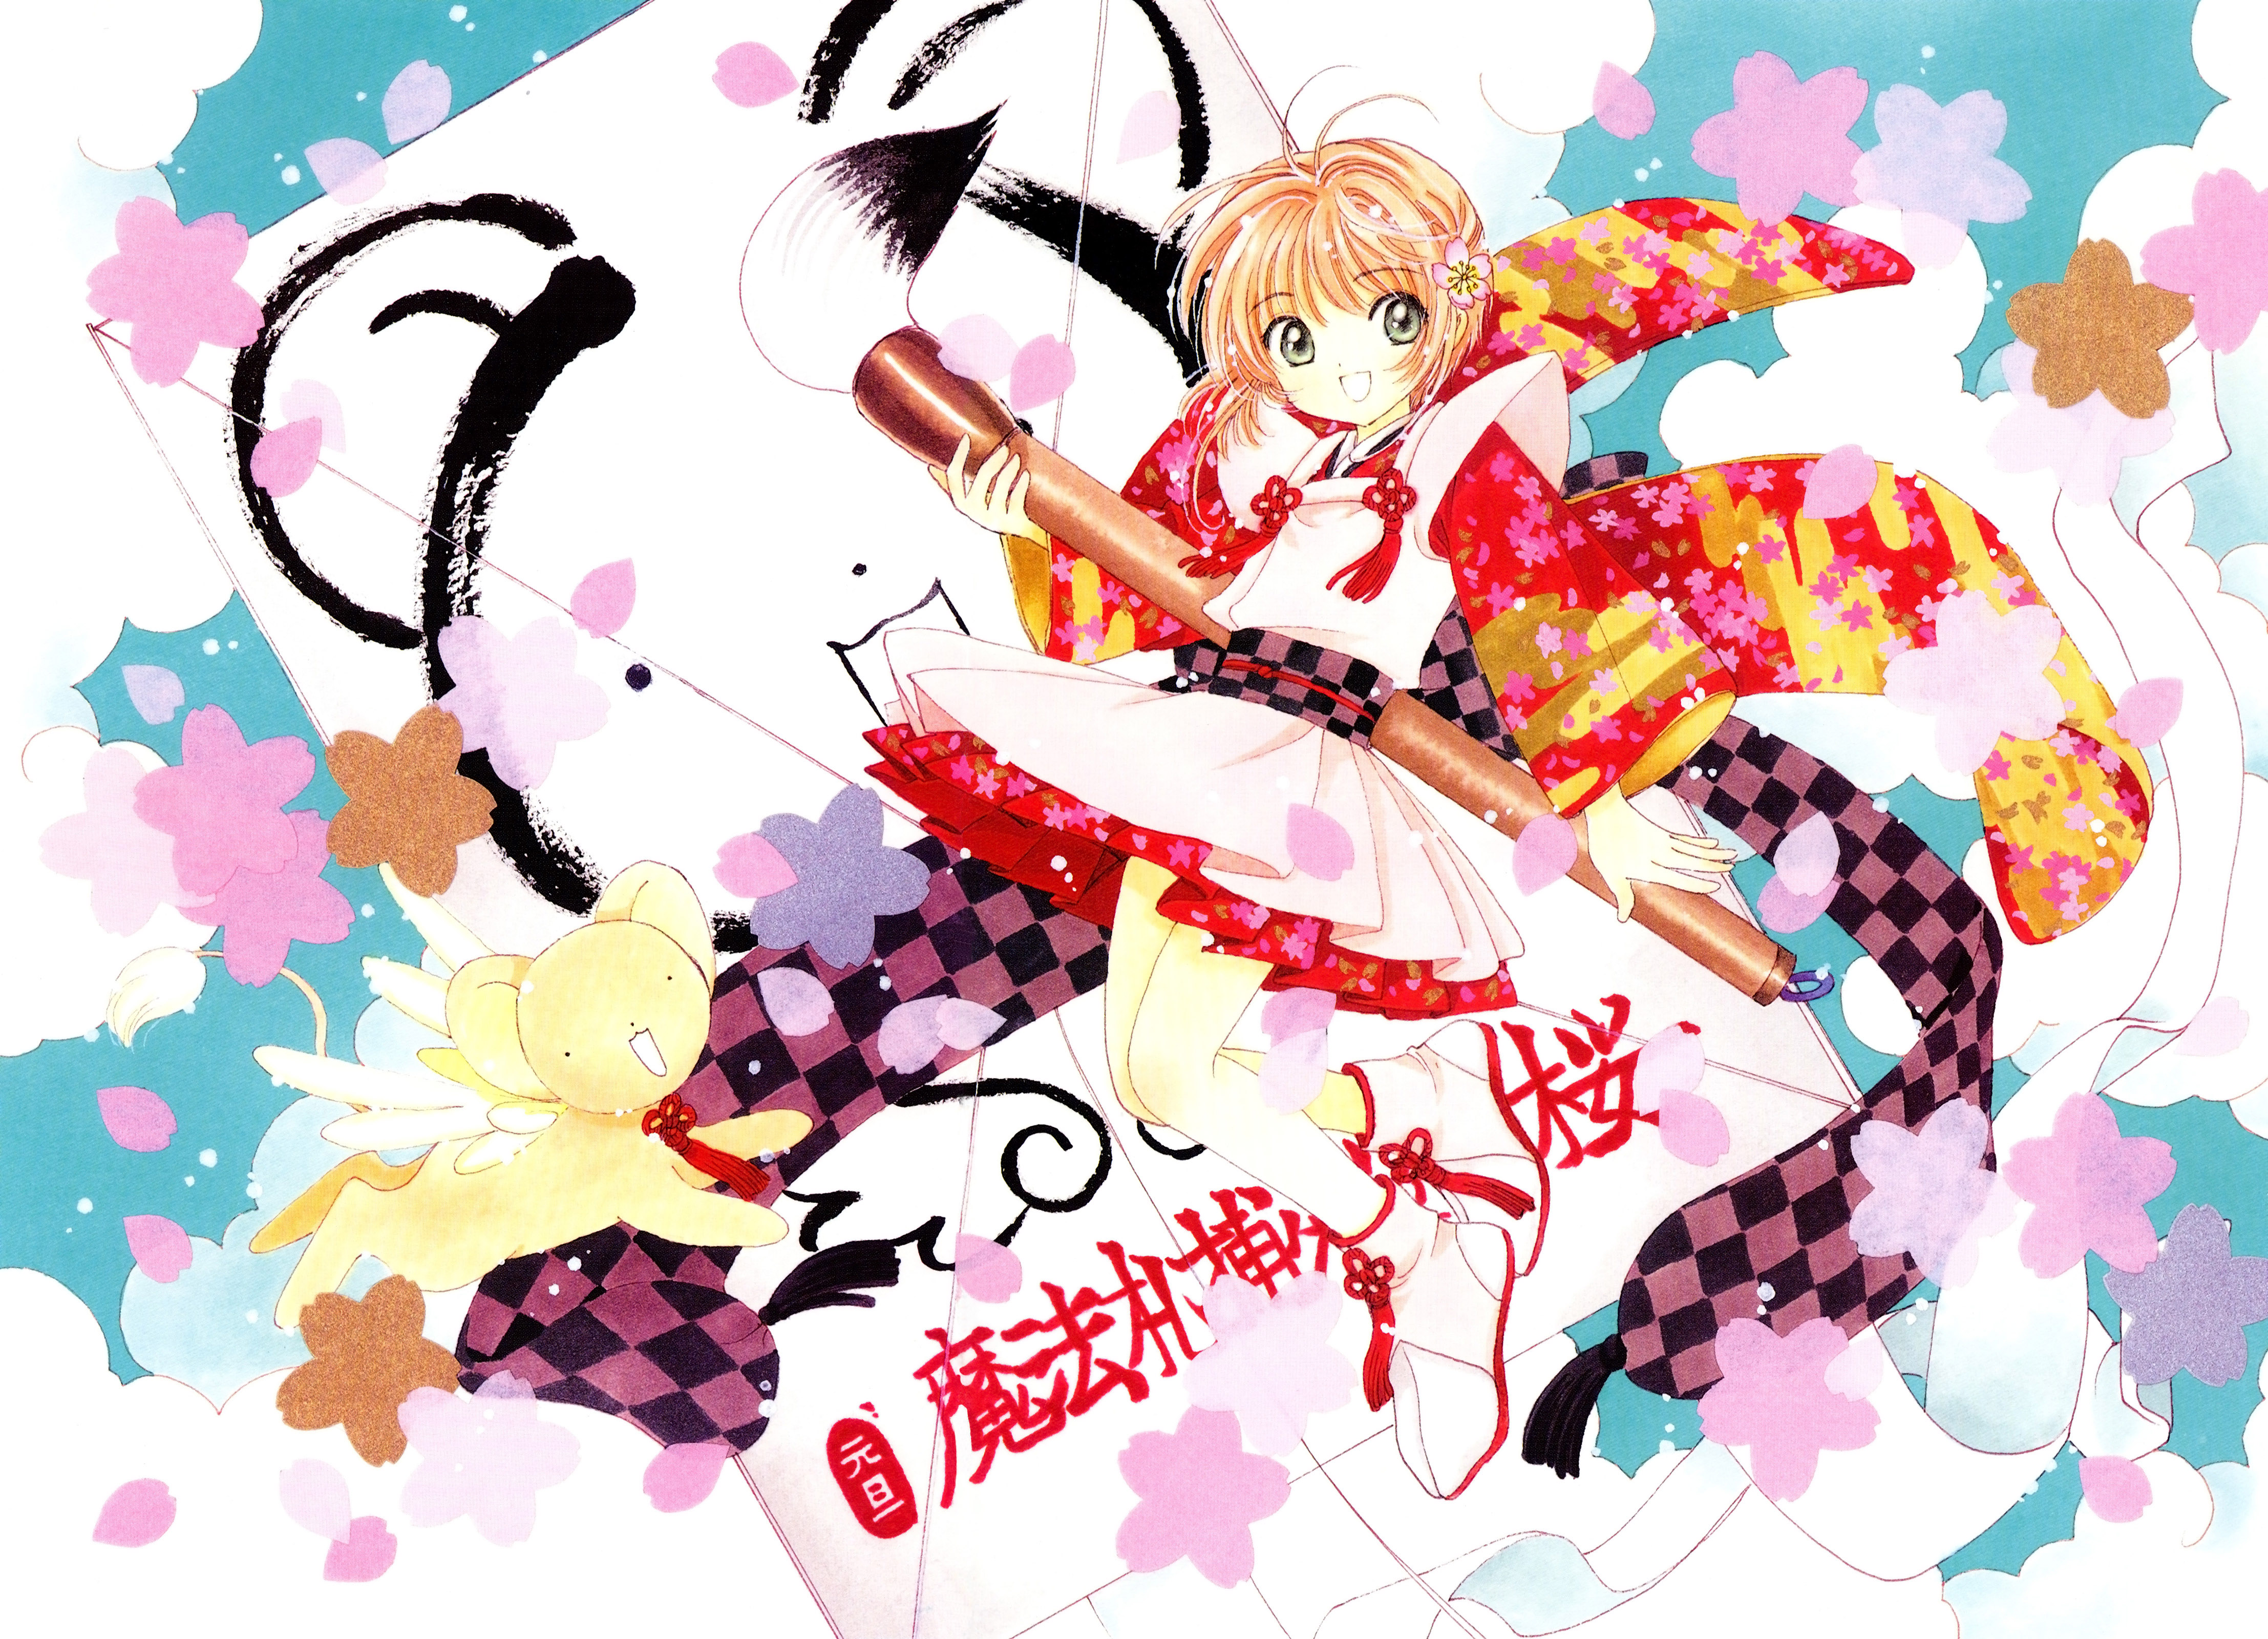 Descarga gratis la imagen Animado, Sakura Cazadora De Cartas, Sakura Kinomoto, Keroberos (Card Captor Sakura) en el escritorio de tu PC